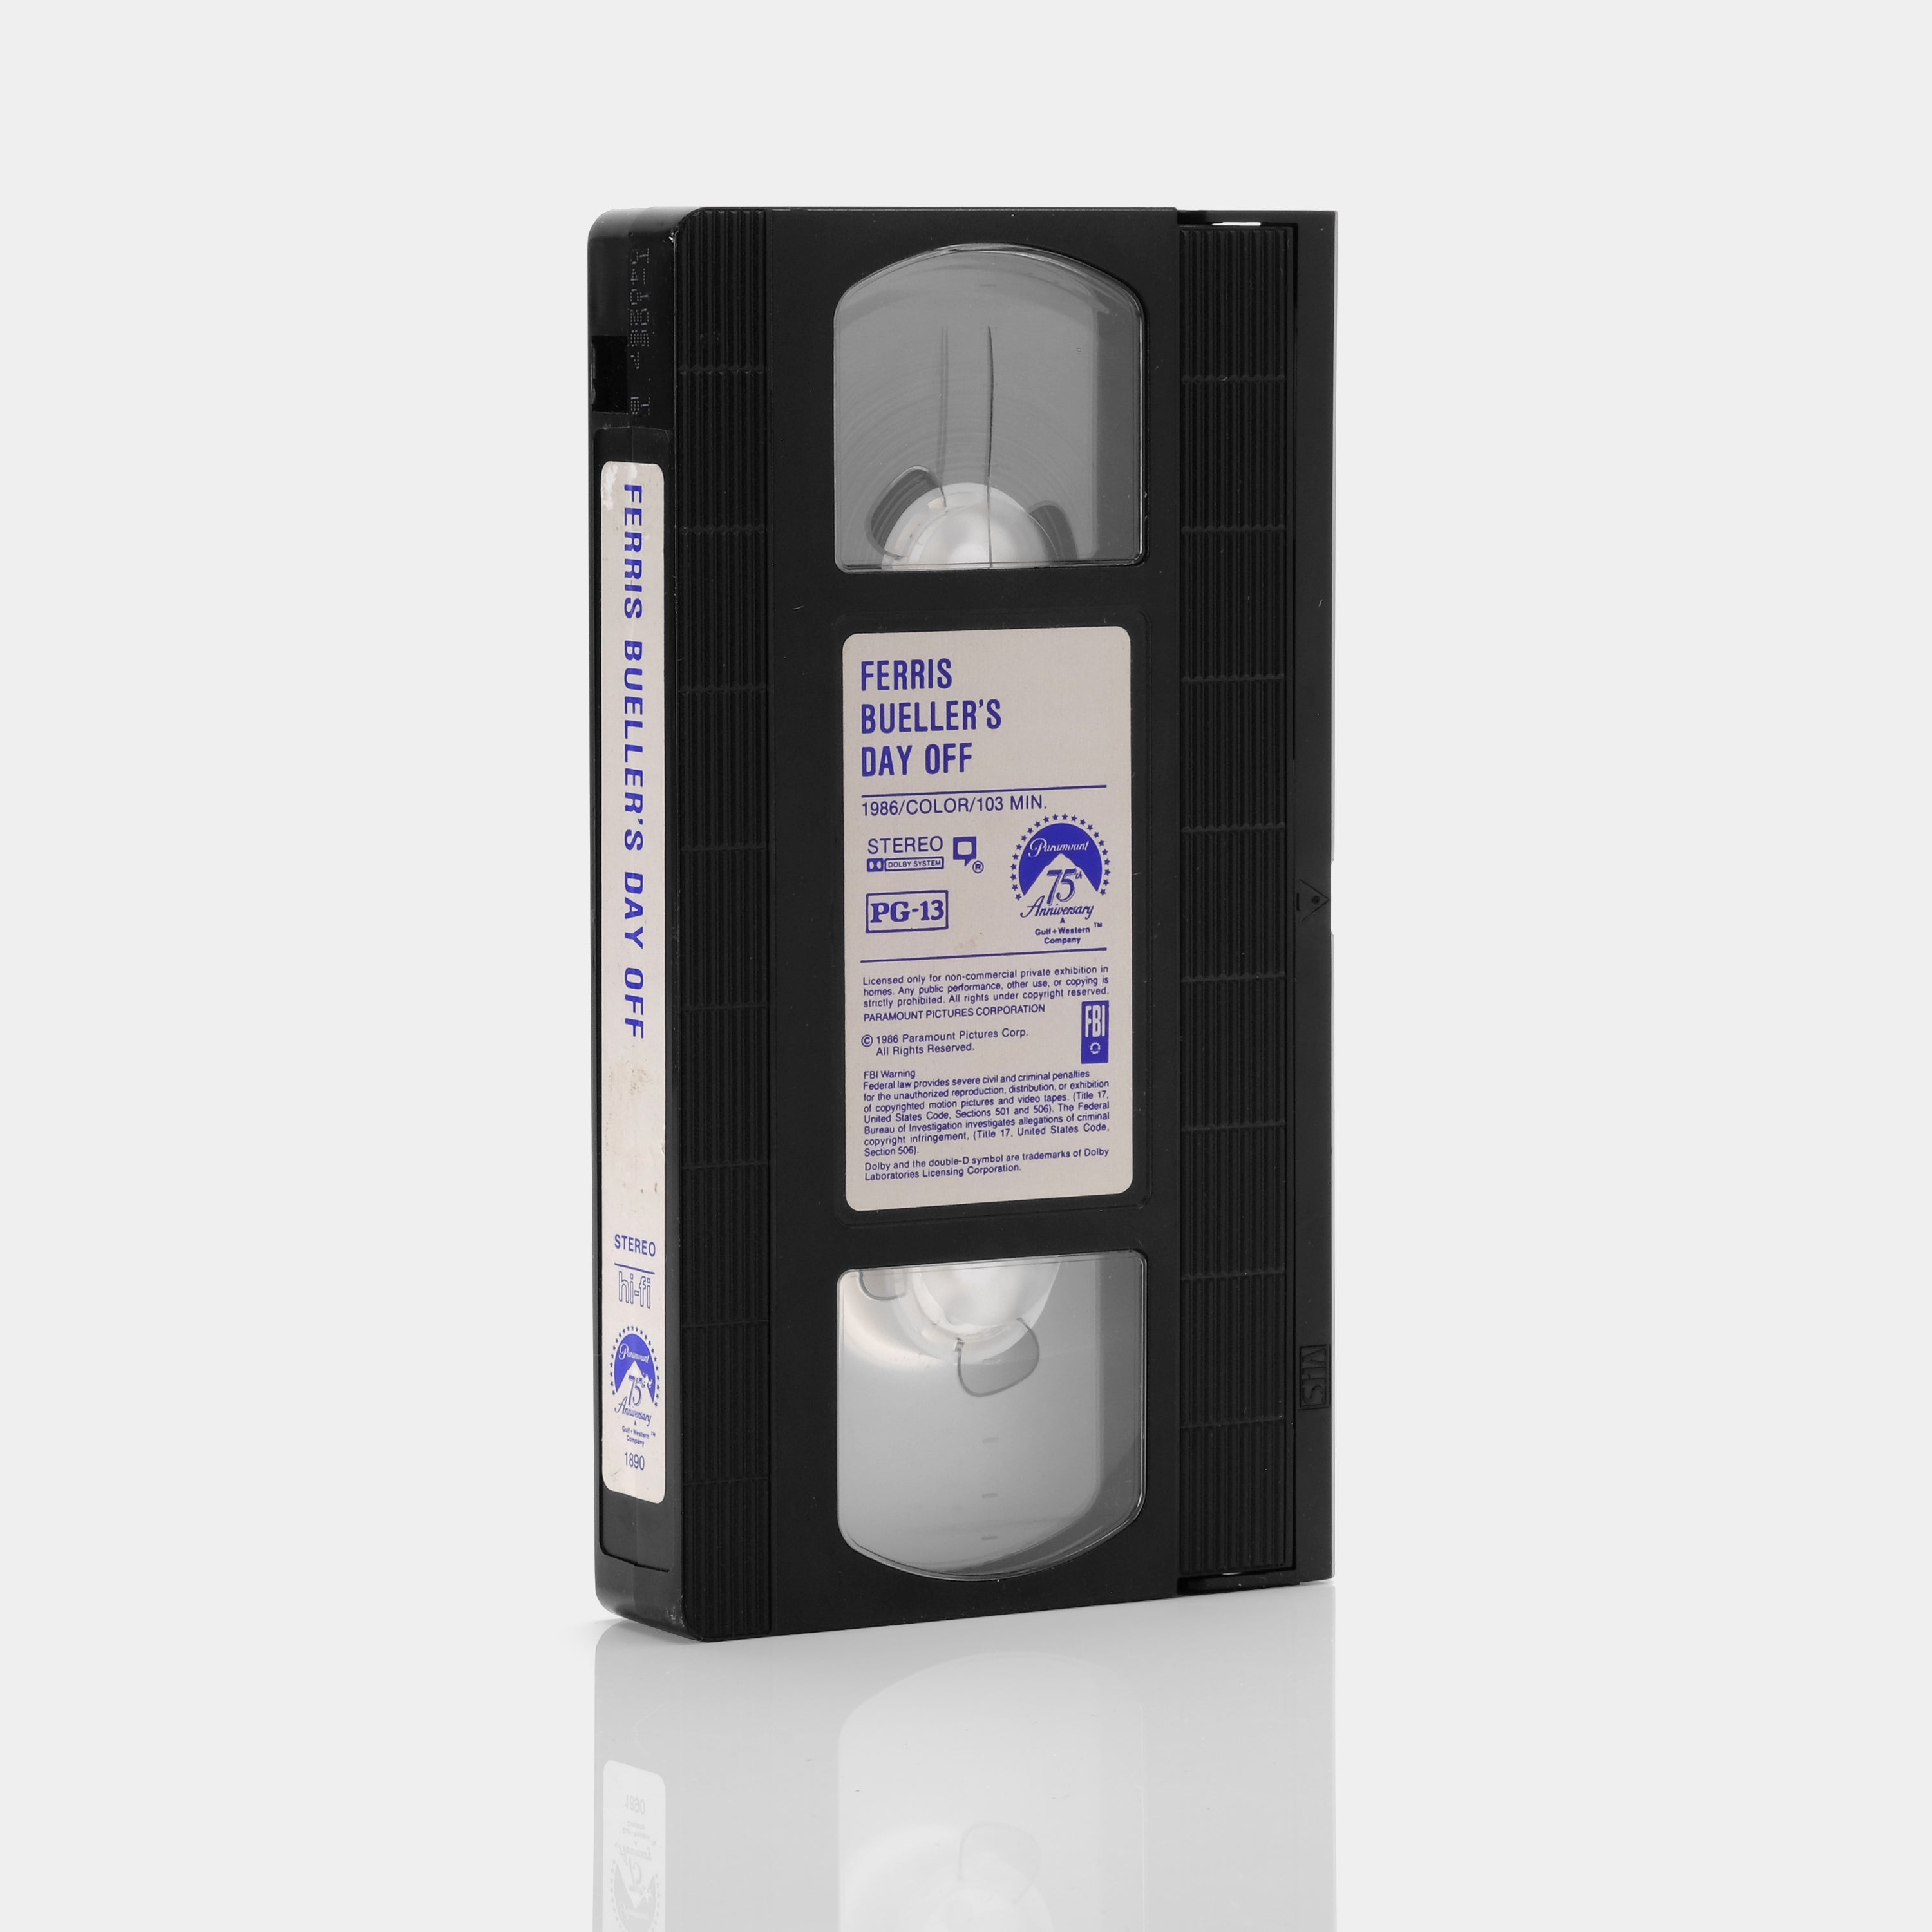 Ferris Bueller's Day Off VHS Tape